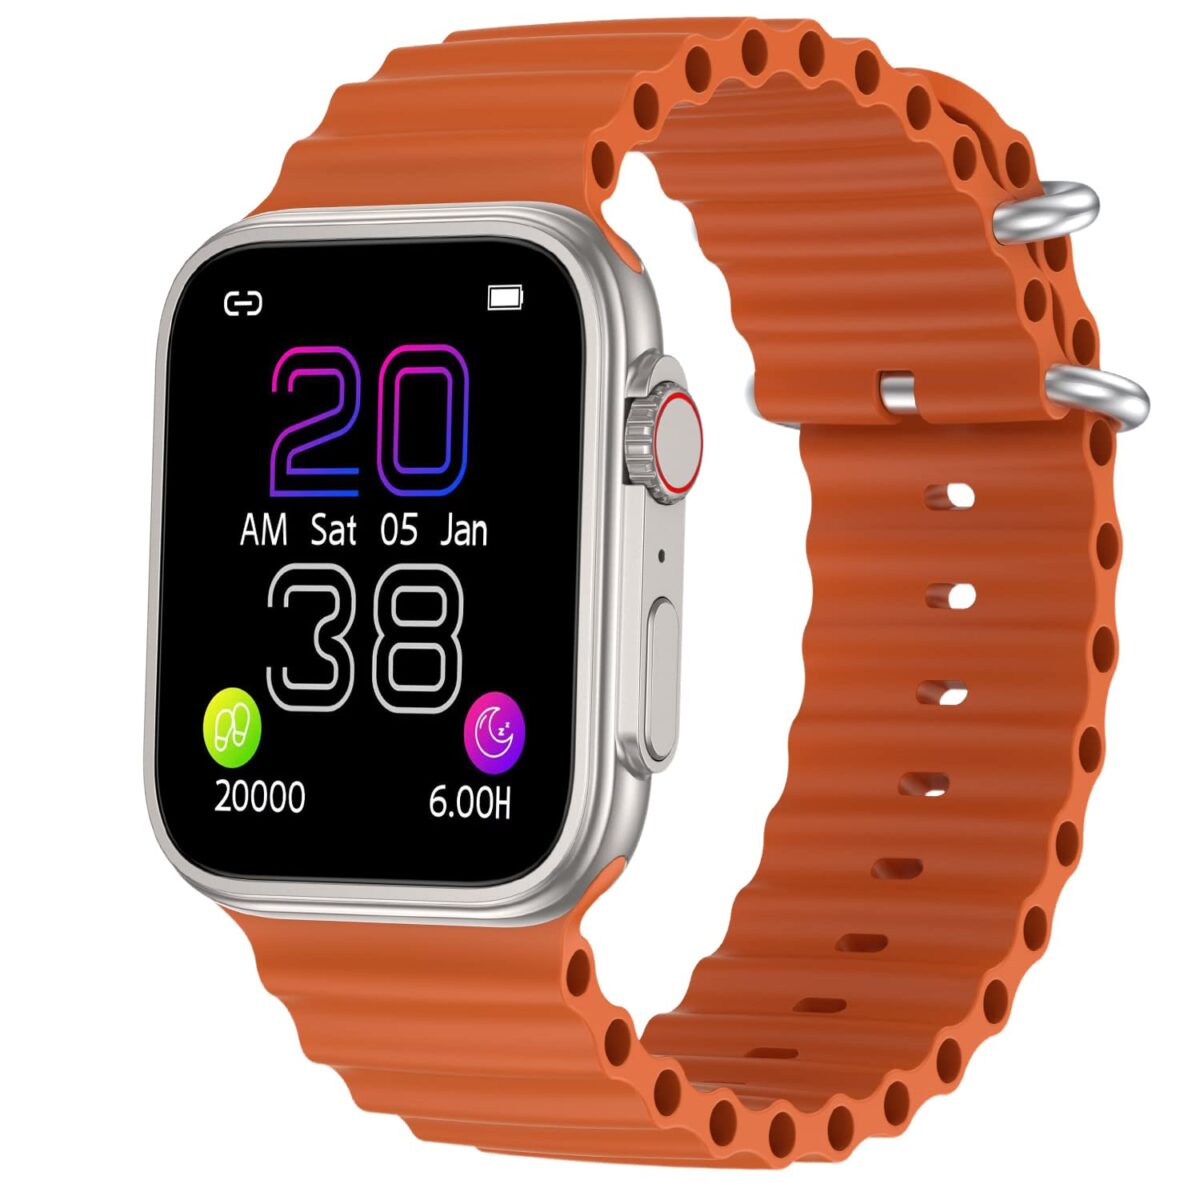 Fire-boltt edge smartwatch, orange